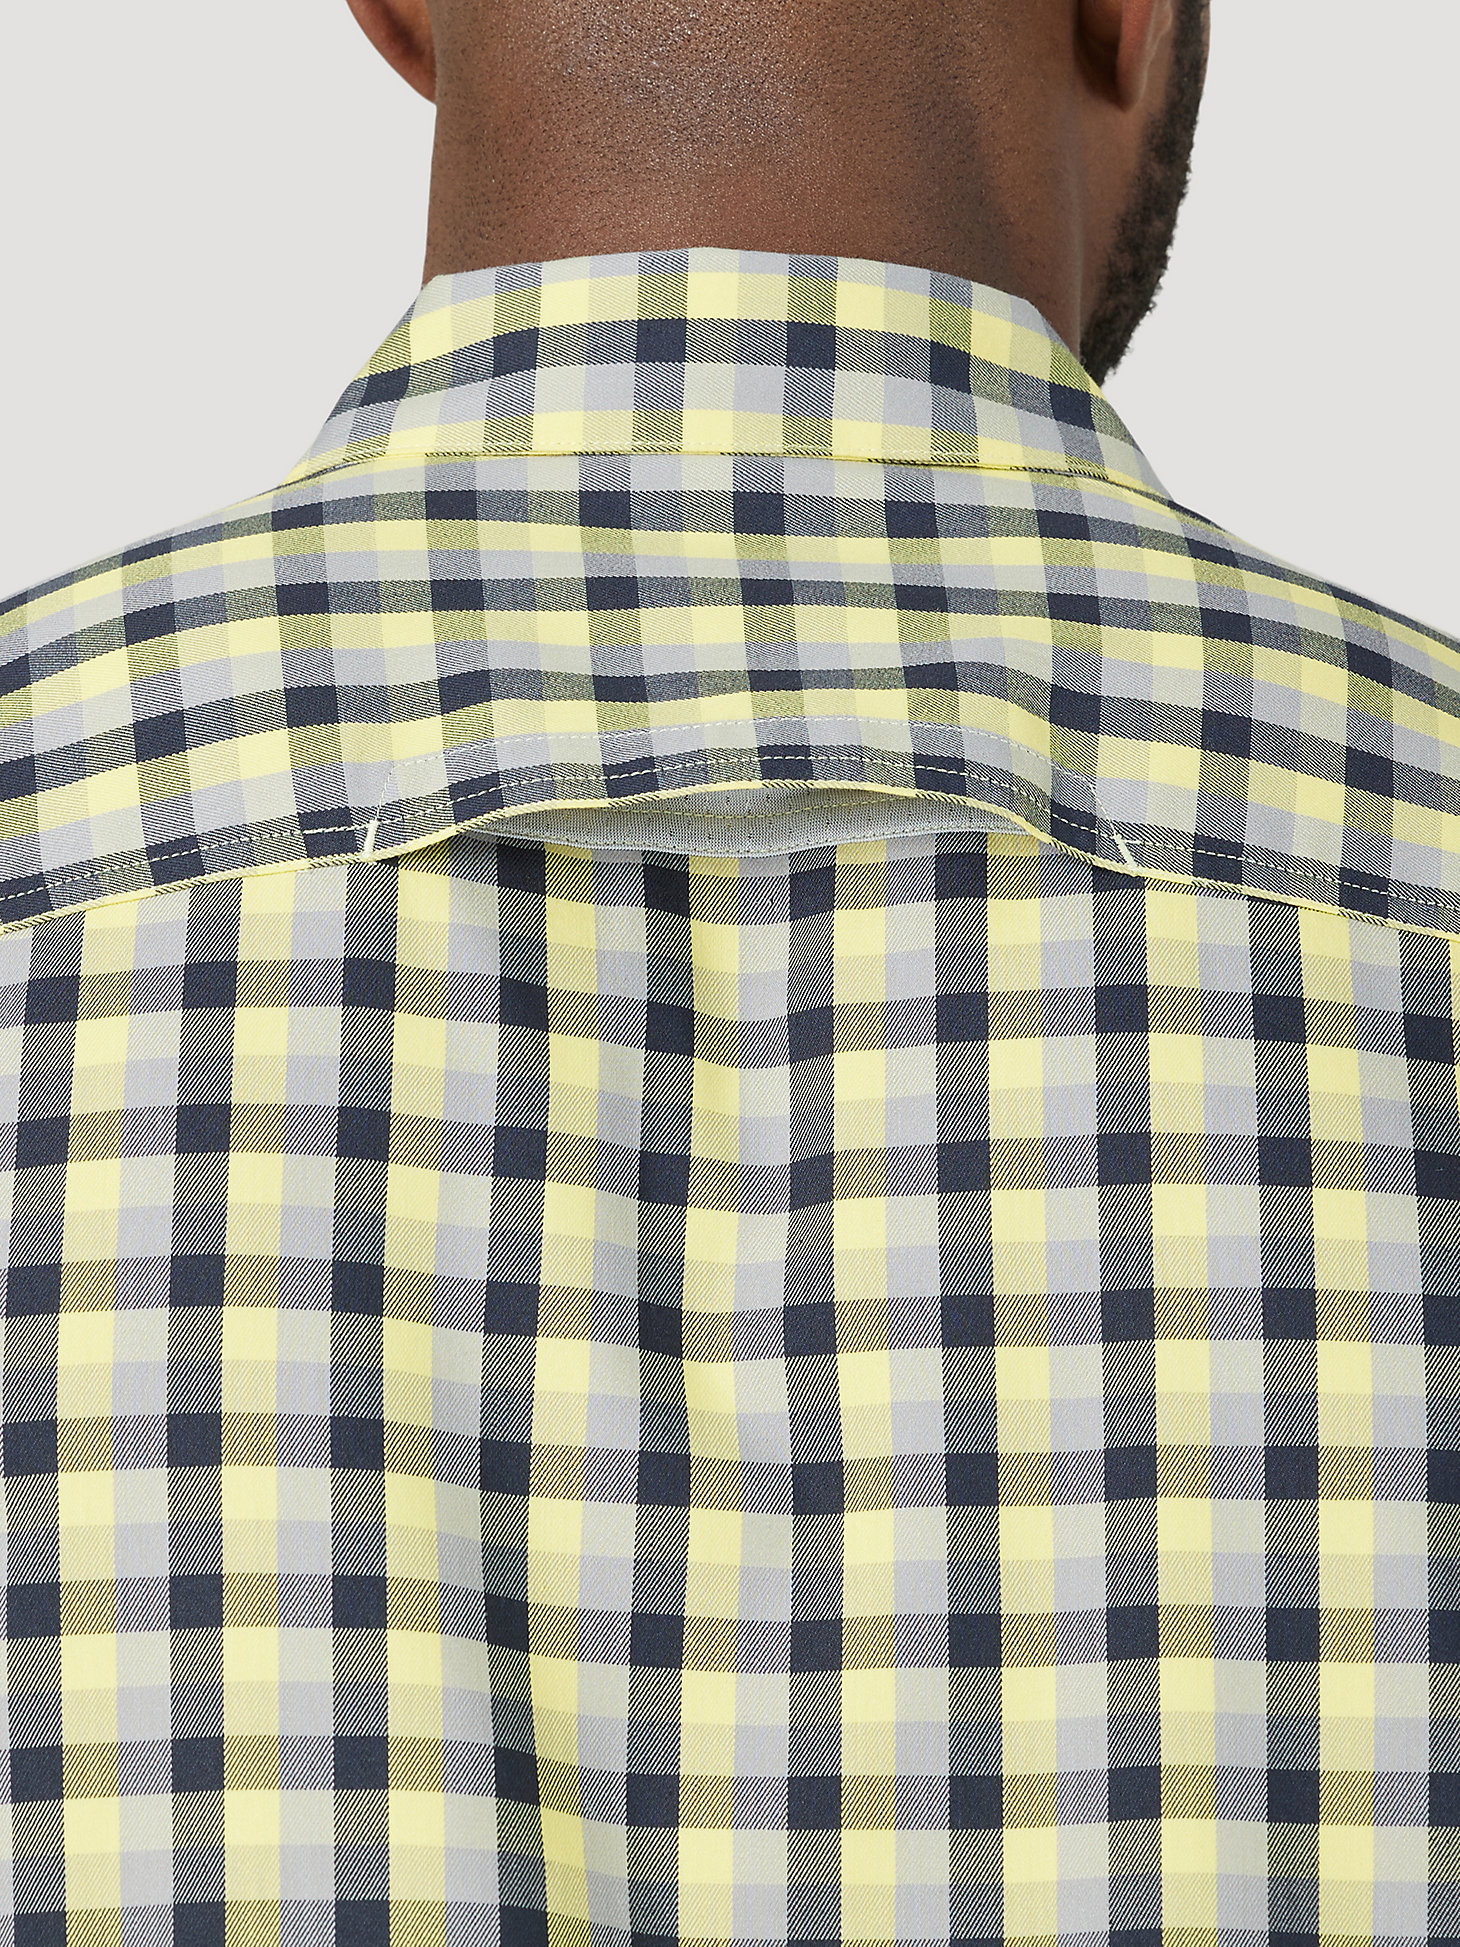 Men's Eco-Friendly Plaid Short Sleeve Camp Shirt in Primrose Yellow alternative view 3